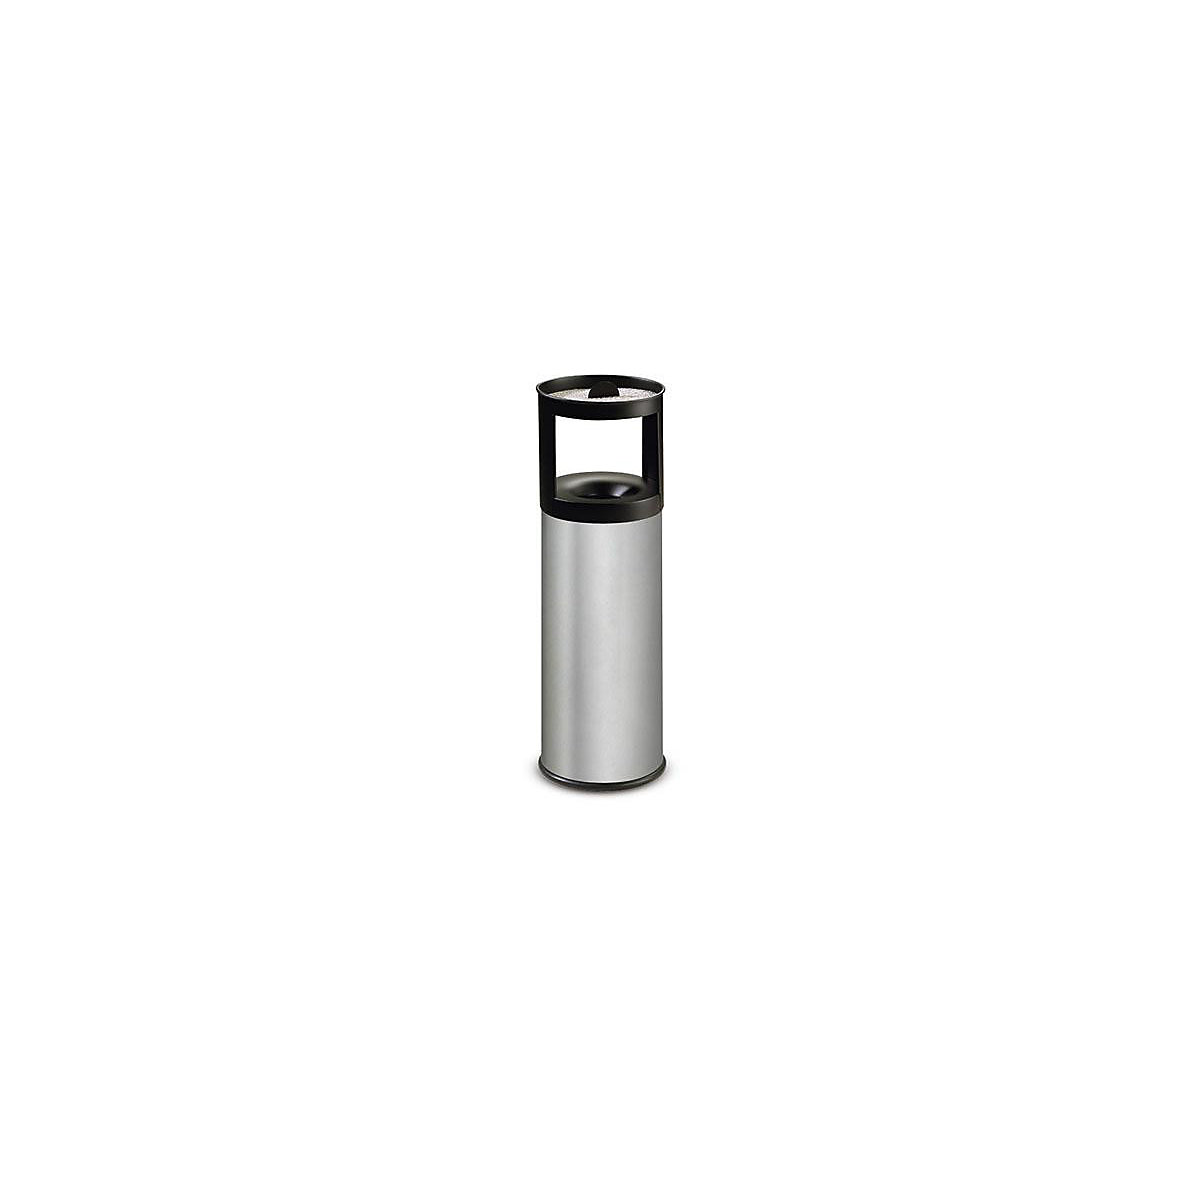 Cinzeiro combinado, autoextintor, volume 25 l, AxØ 800 x 250 mm, aço inoxidável-4